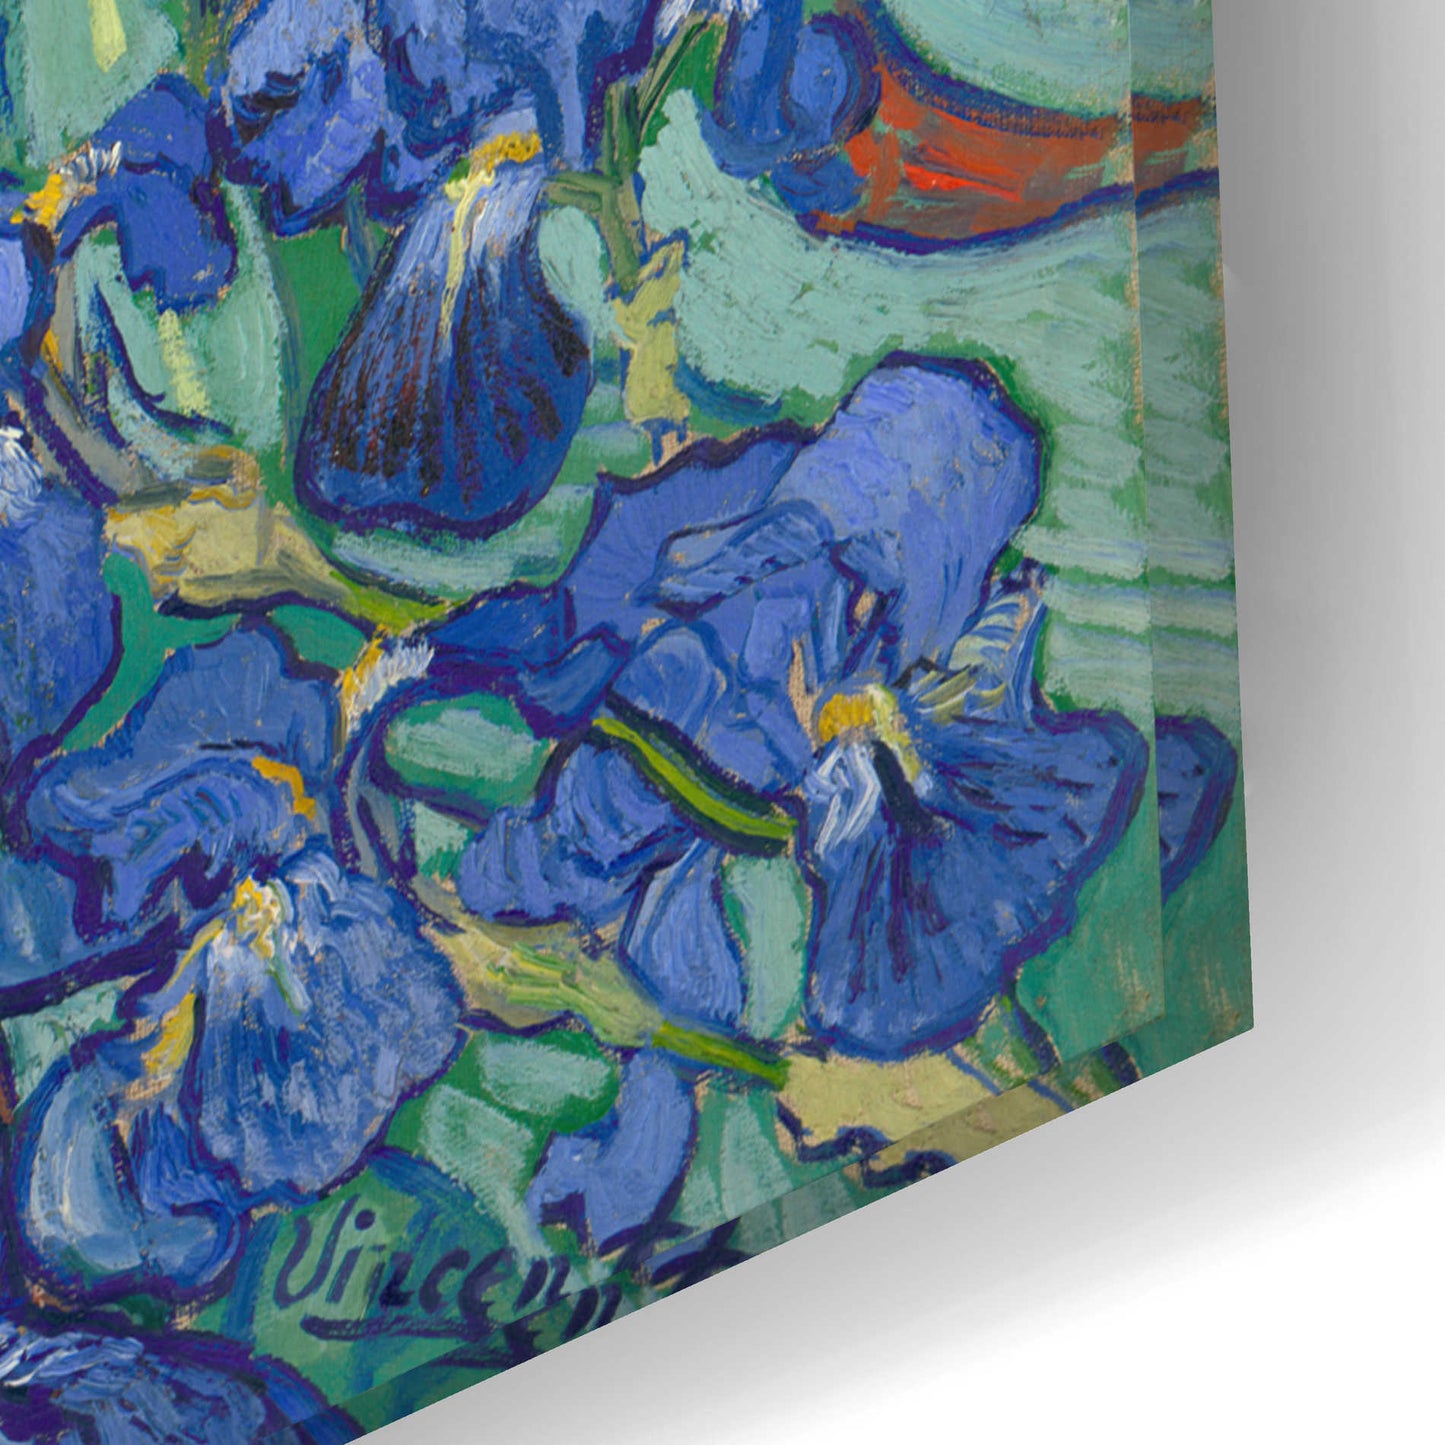 Epic Art 'Irises' by Vincent van Gogh, Acrylic Glass Wall Art,24x16